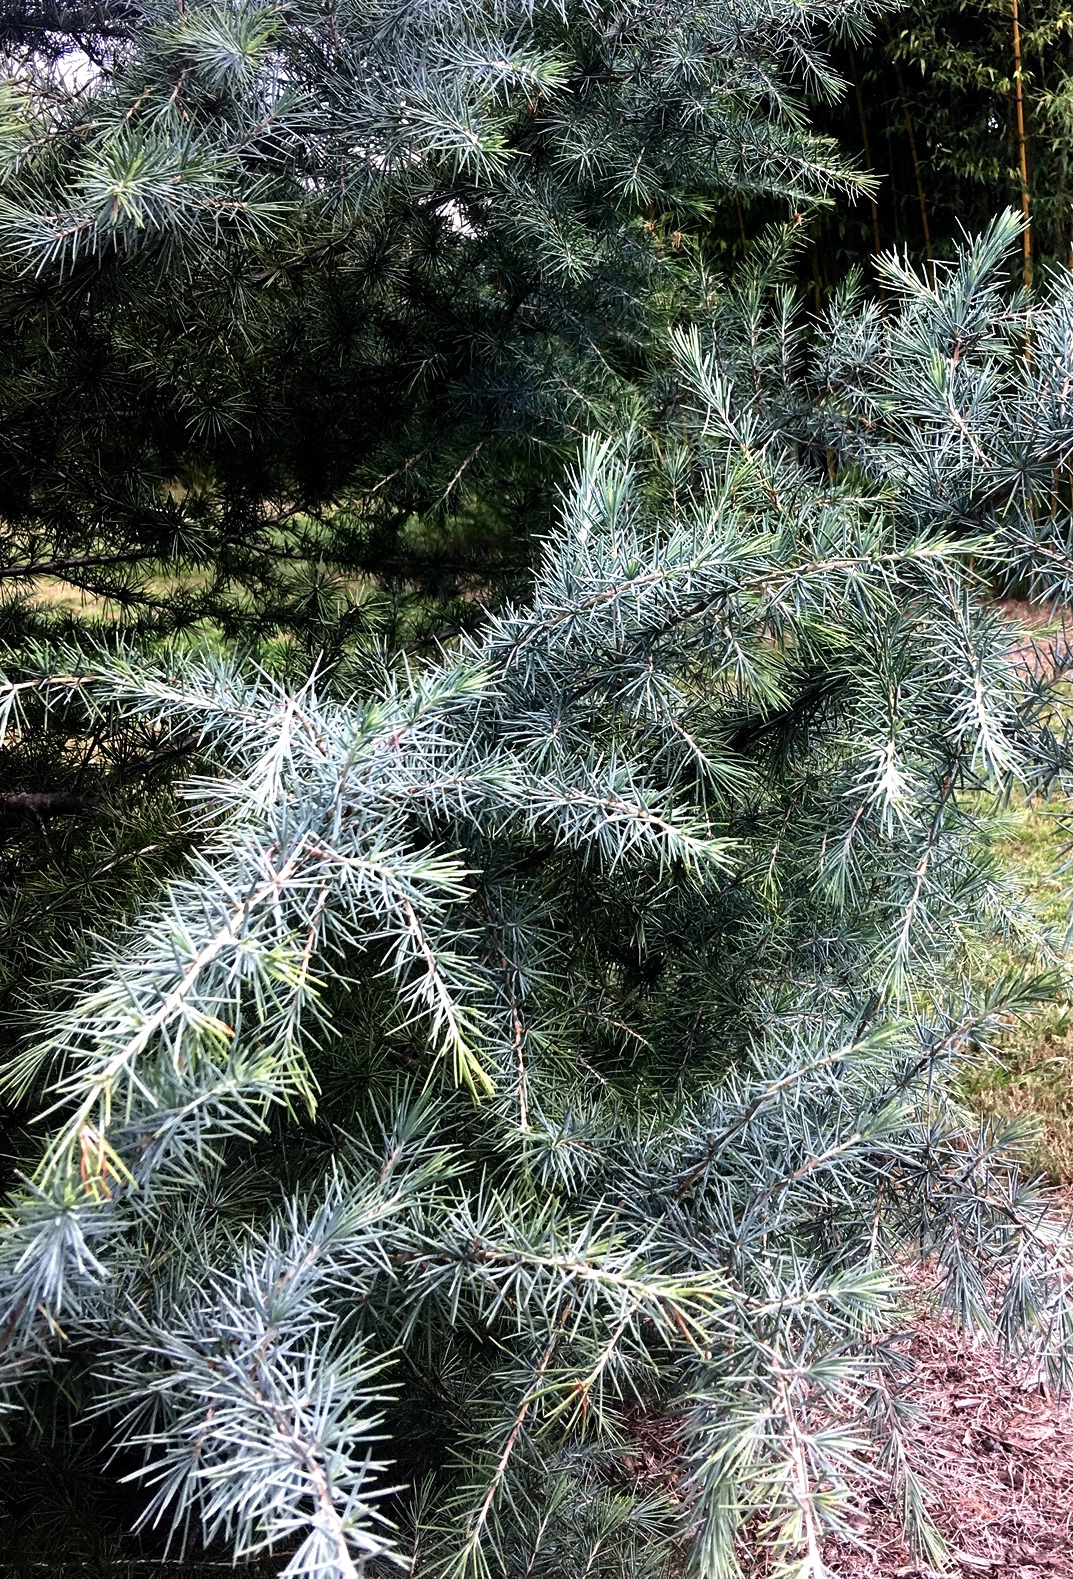 The 'Patti Faye' deodar cedar has steel blue foliage or needles.